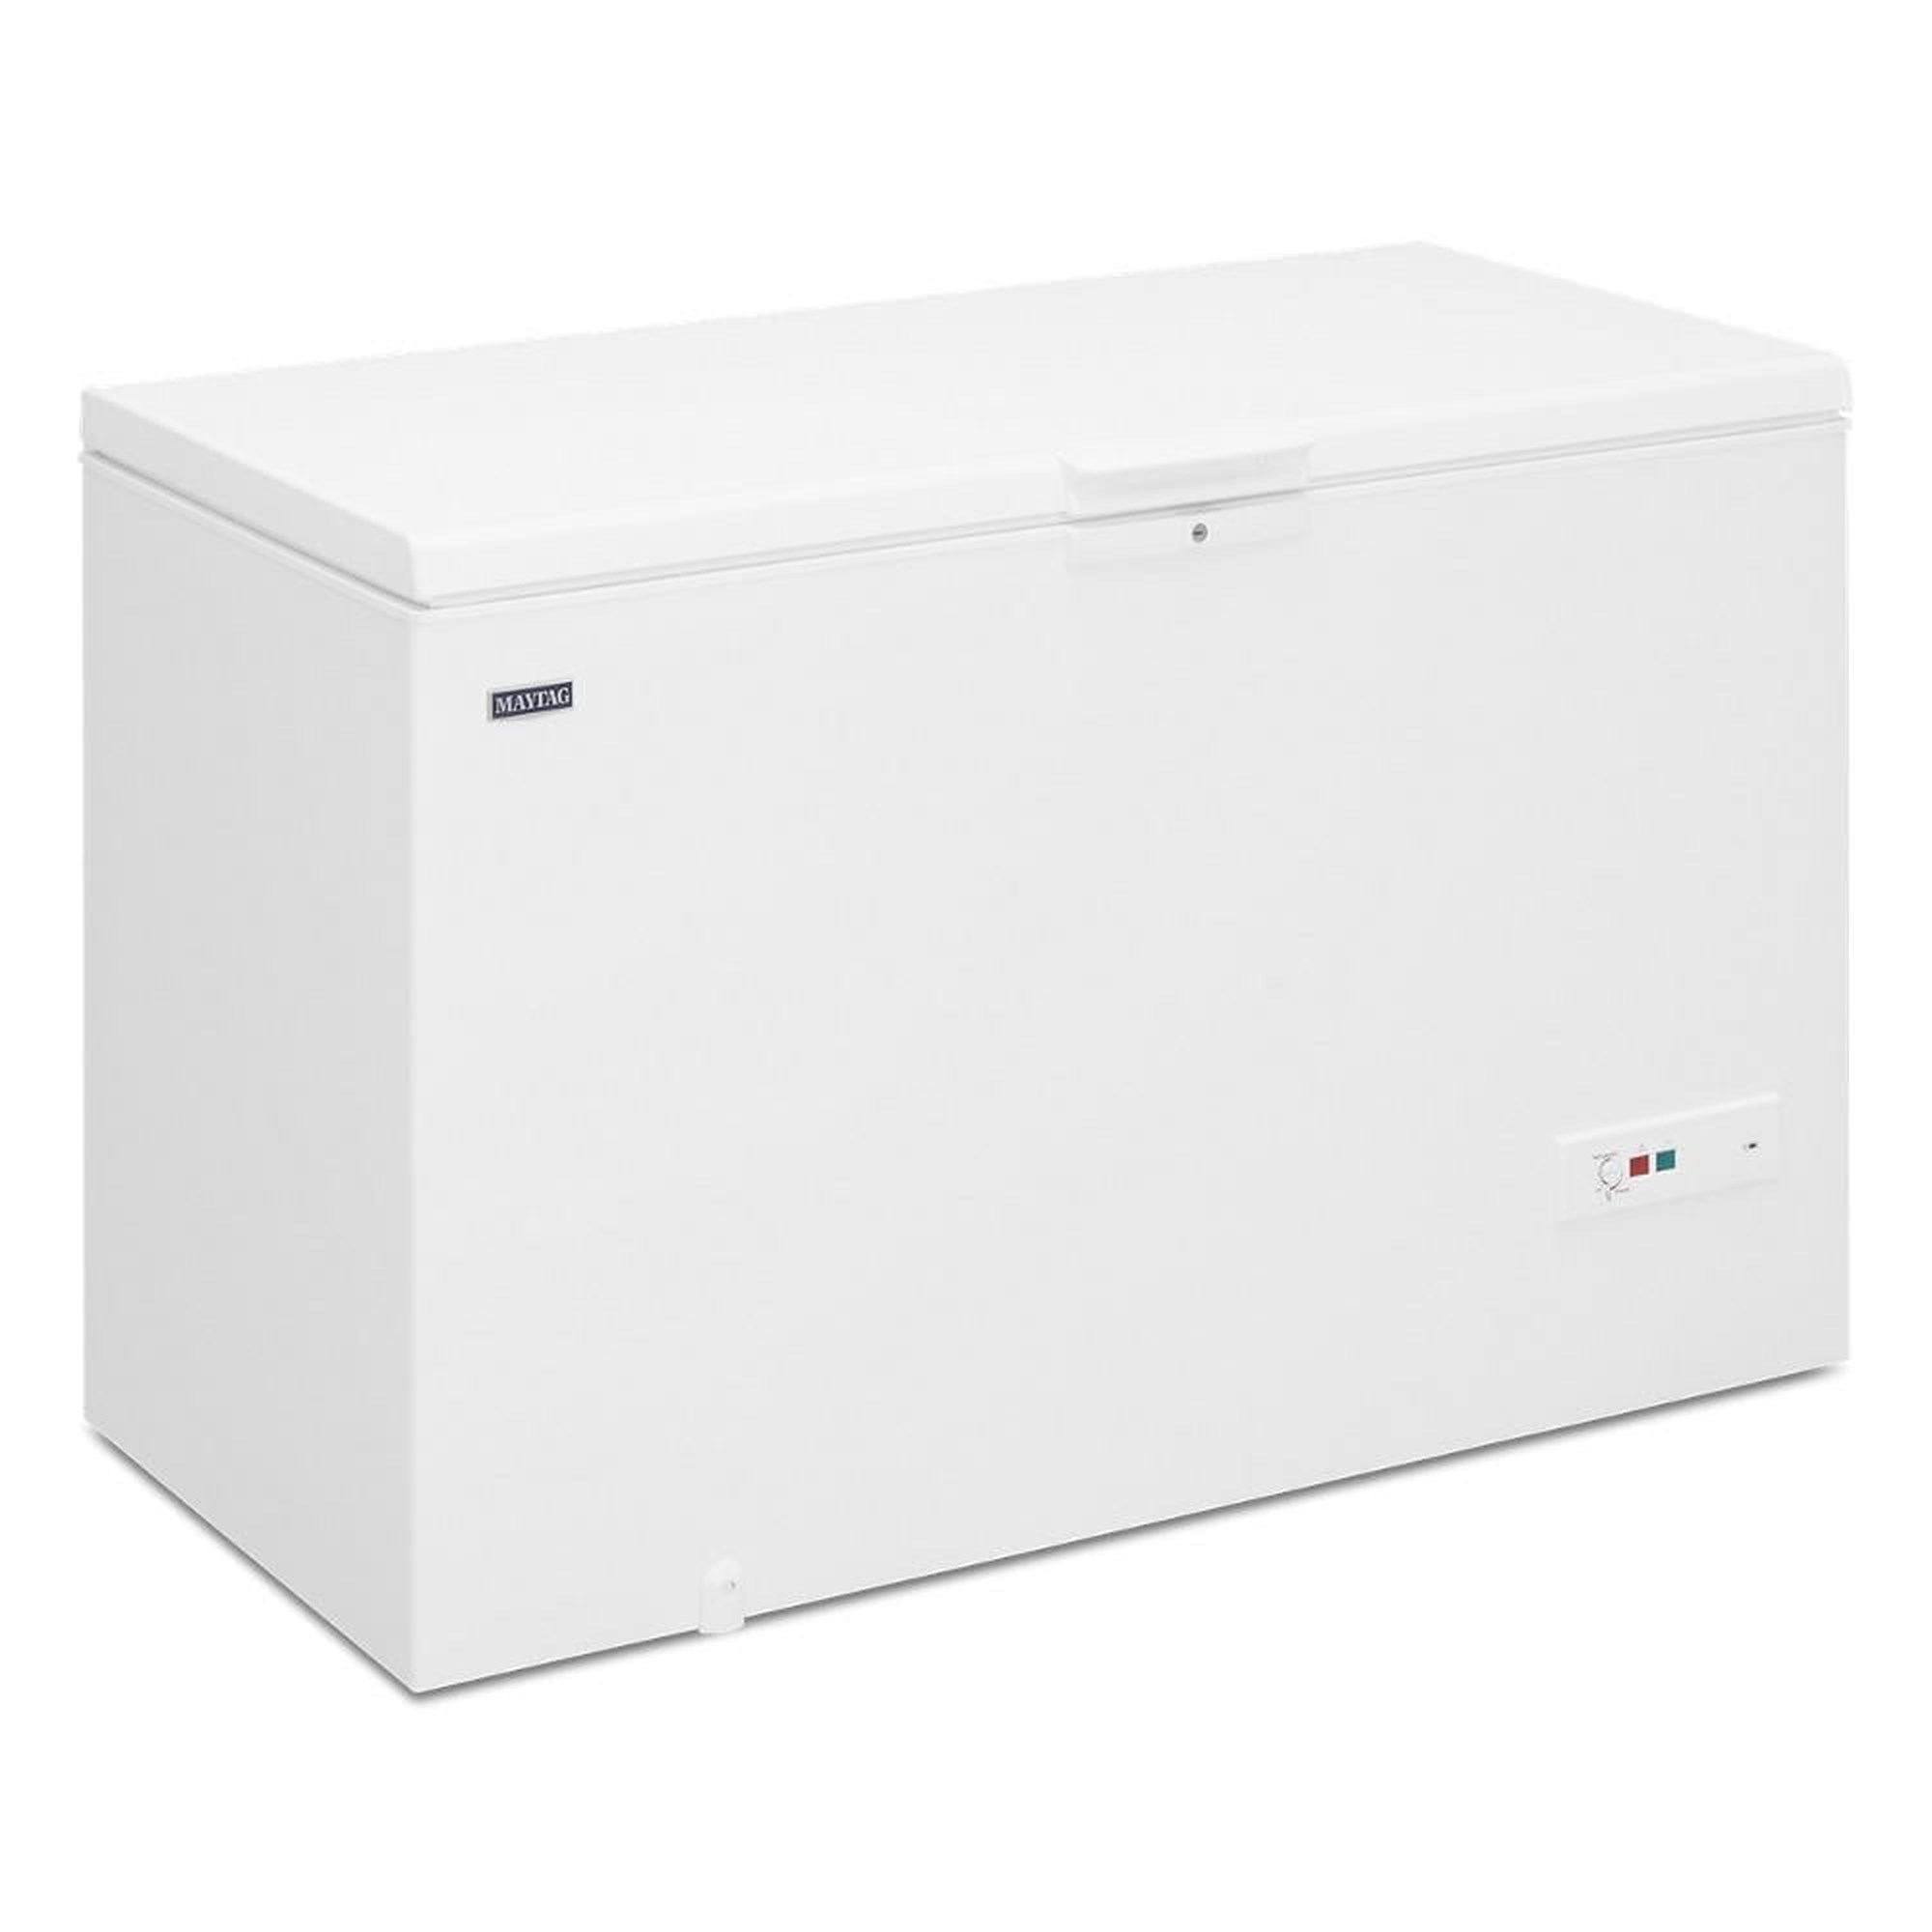 5 Cu. FT Single Top White Door Chest Freezer with Lock - China Chest  Freezer and Refridgerators and Freezers price